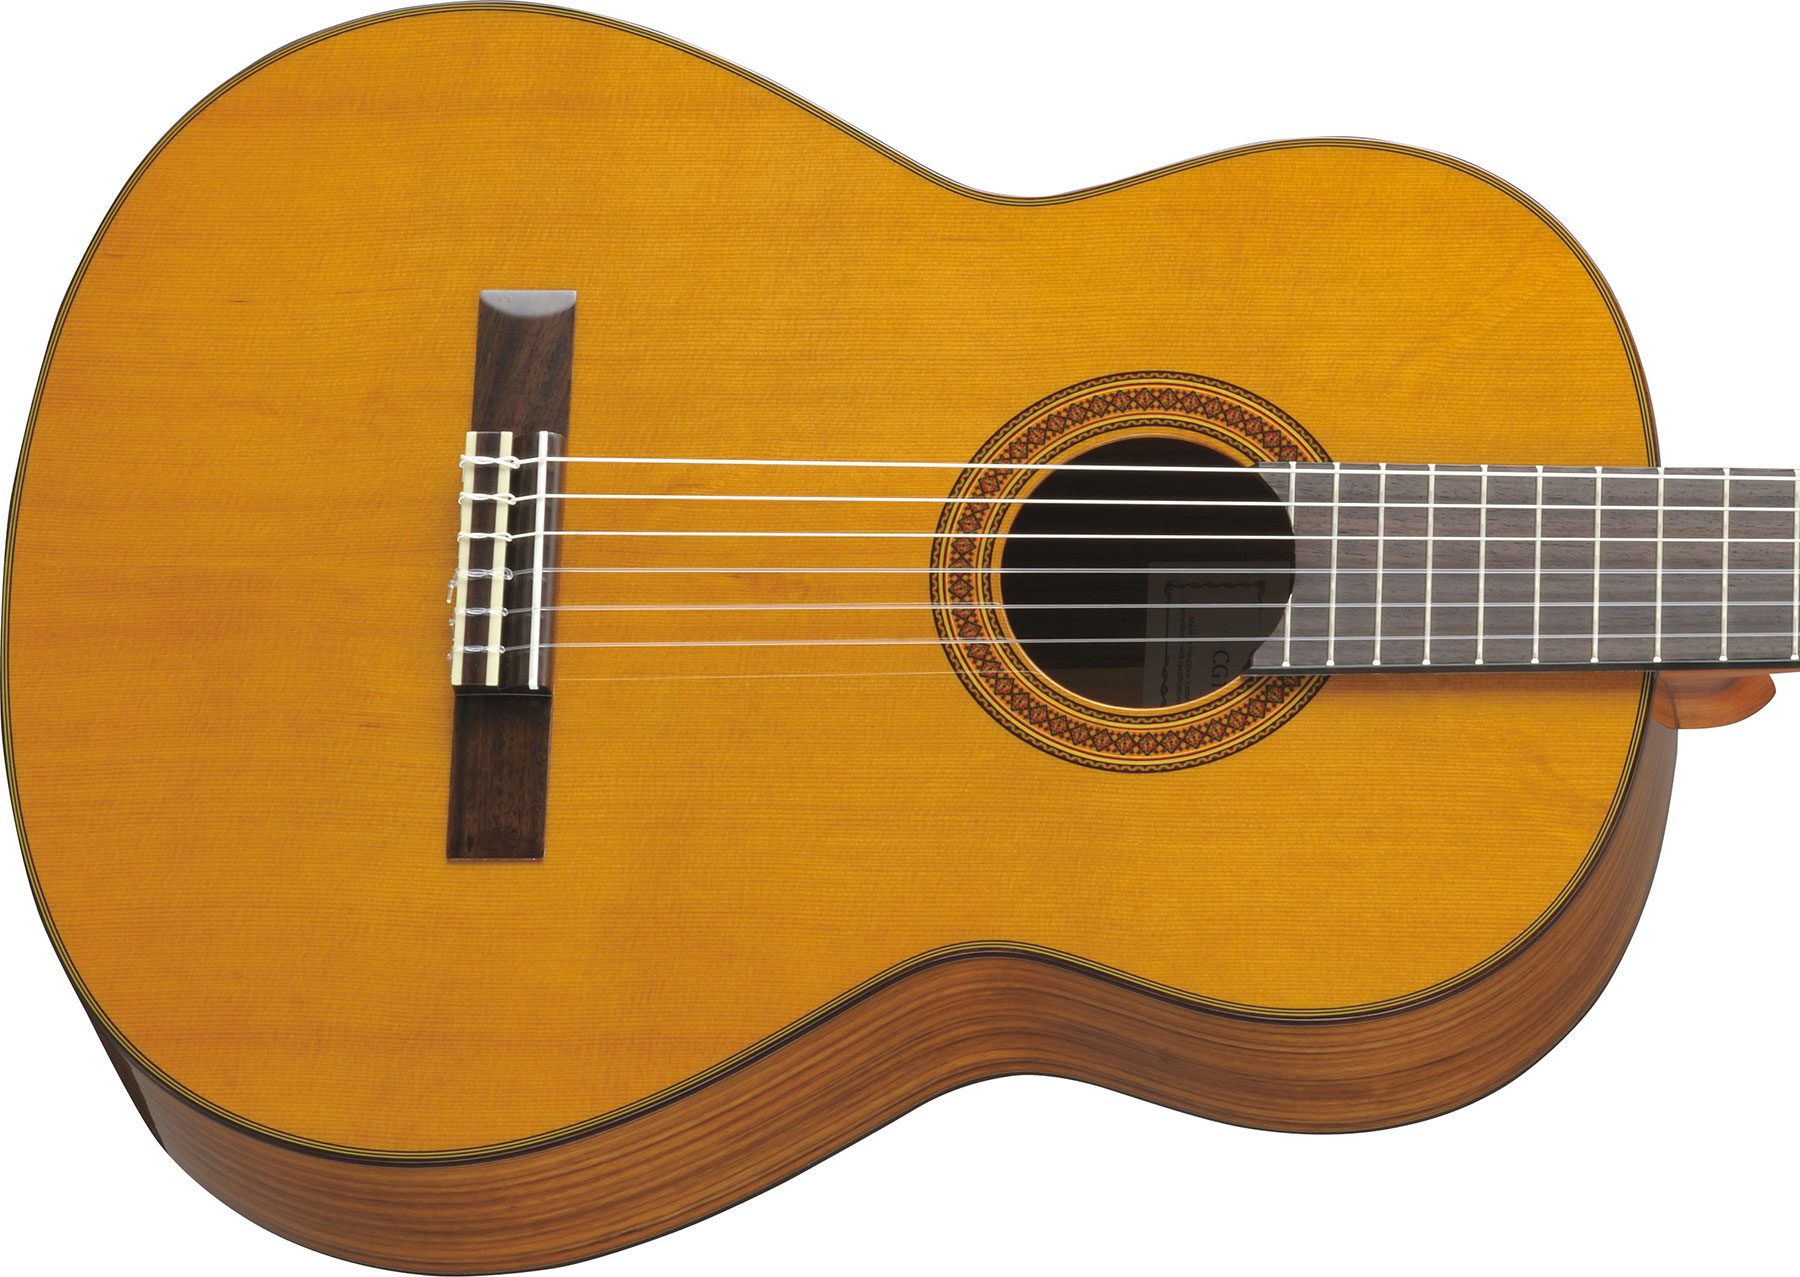 Yamaha Cg162c 4/4 Cedre Ovangkol Rw - Natural - Classical guitar 4/4 size - Variation 1